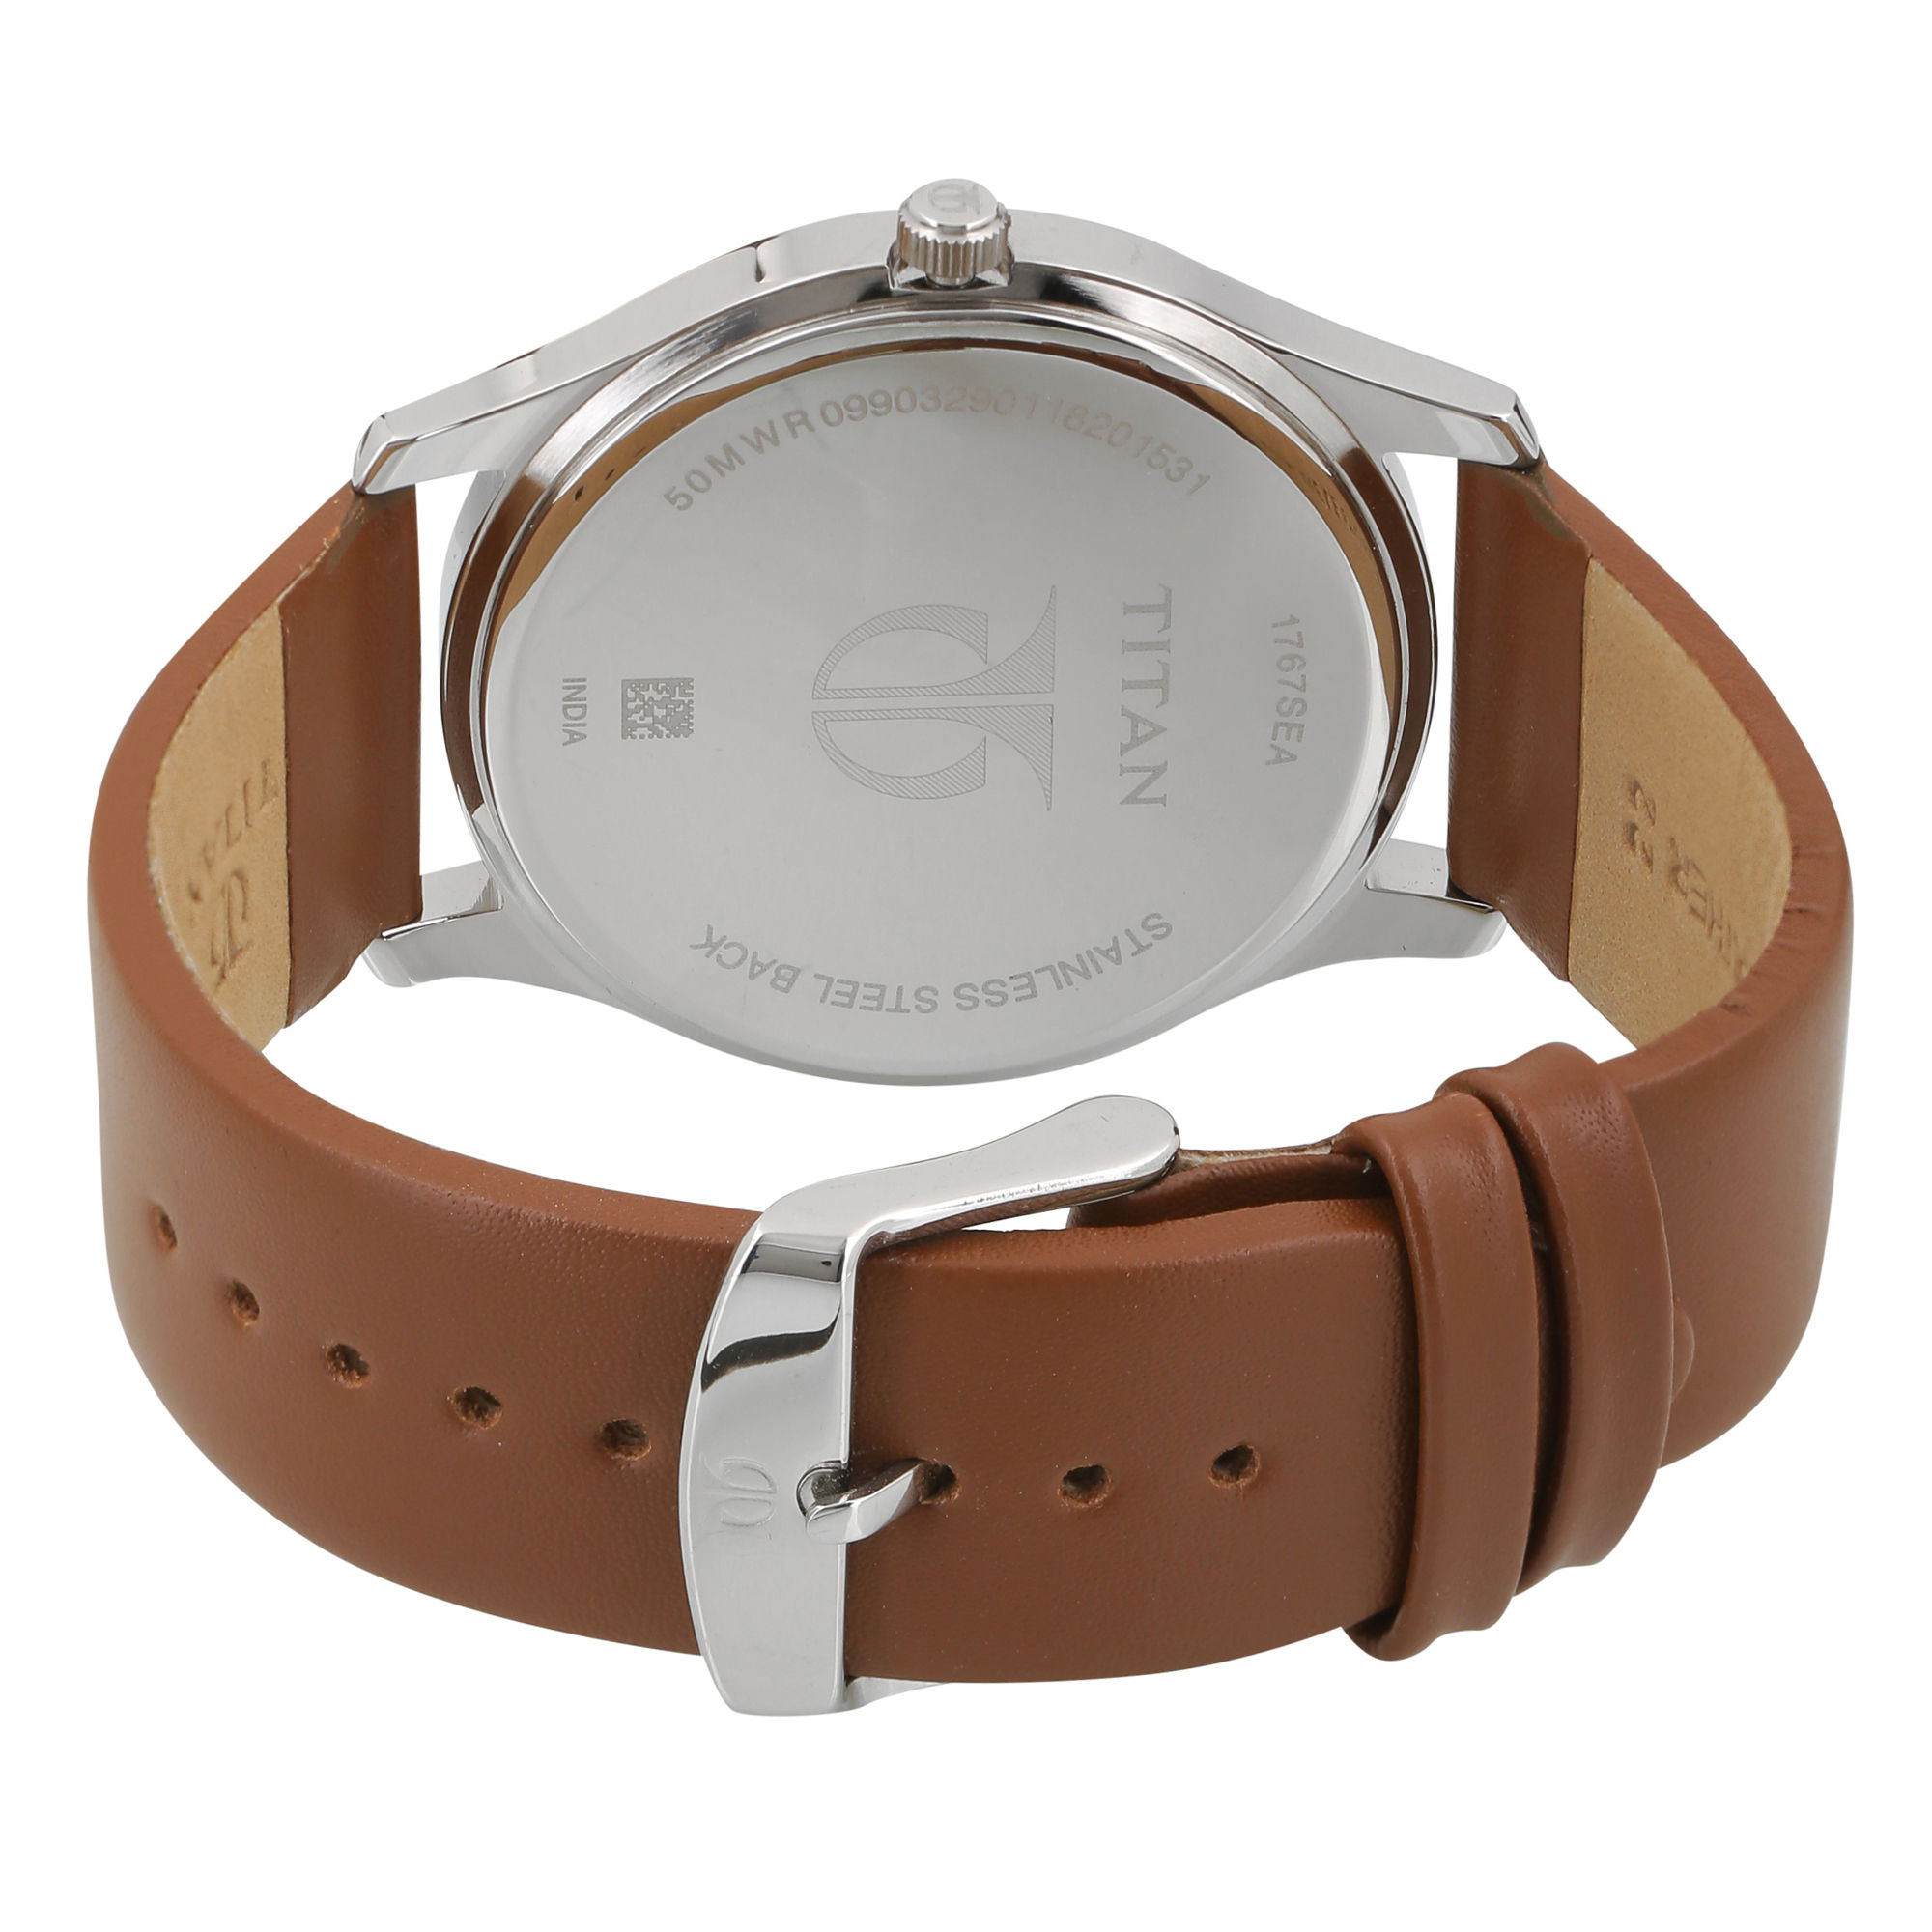 Titan NM1767SL01 White Dial Analog Watch For Men: Buy Titan NM1767SL01 ...